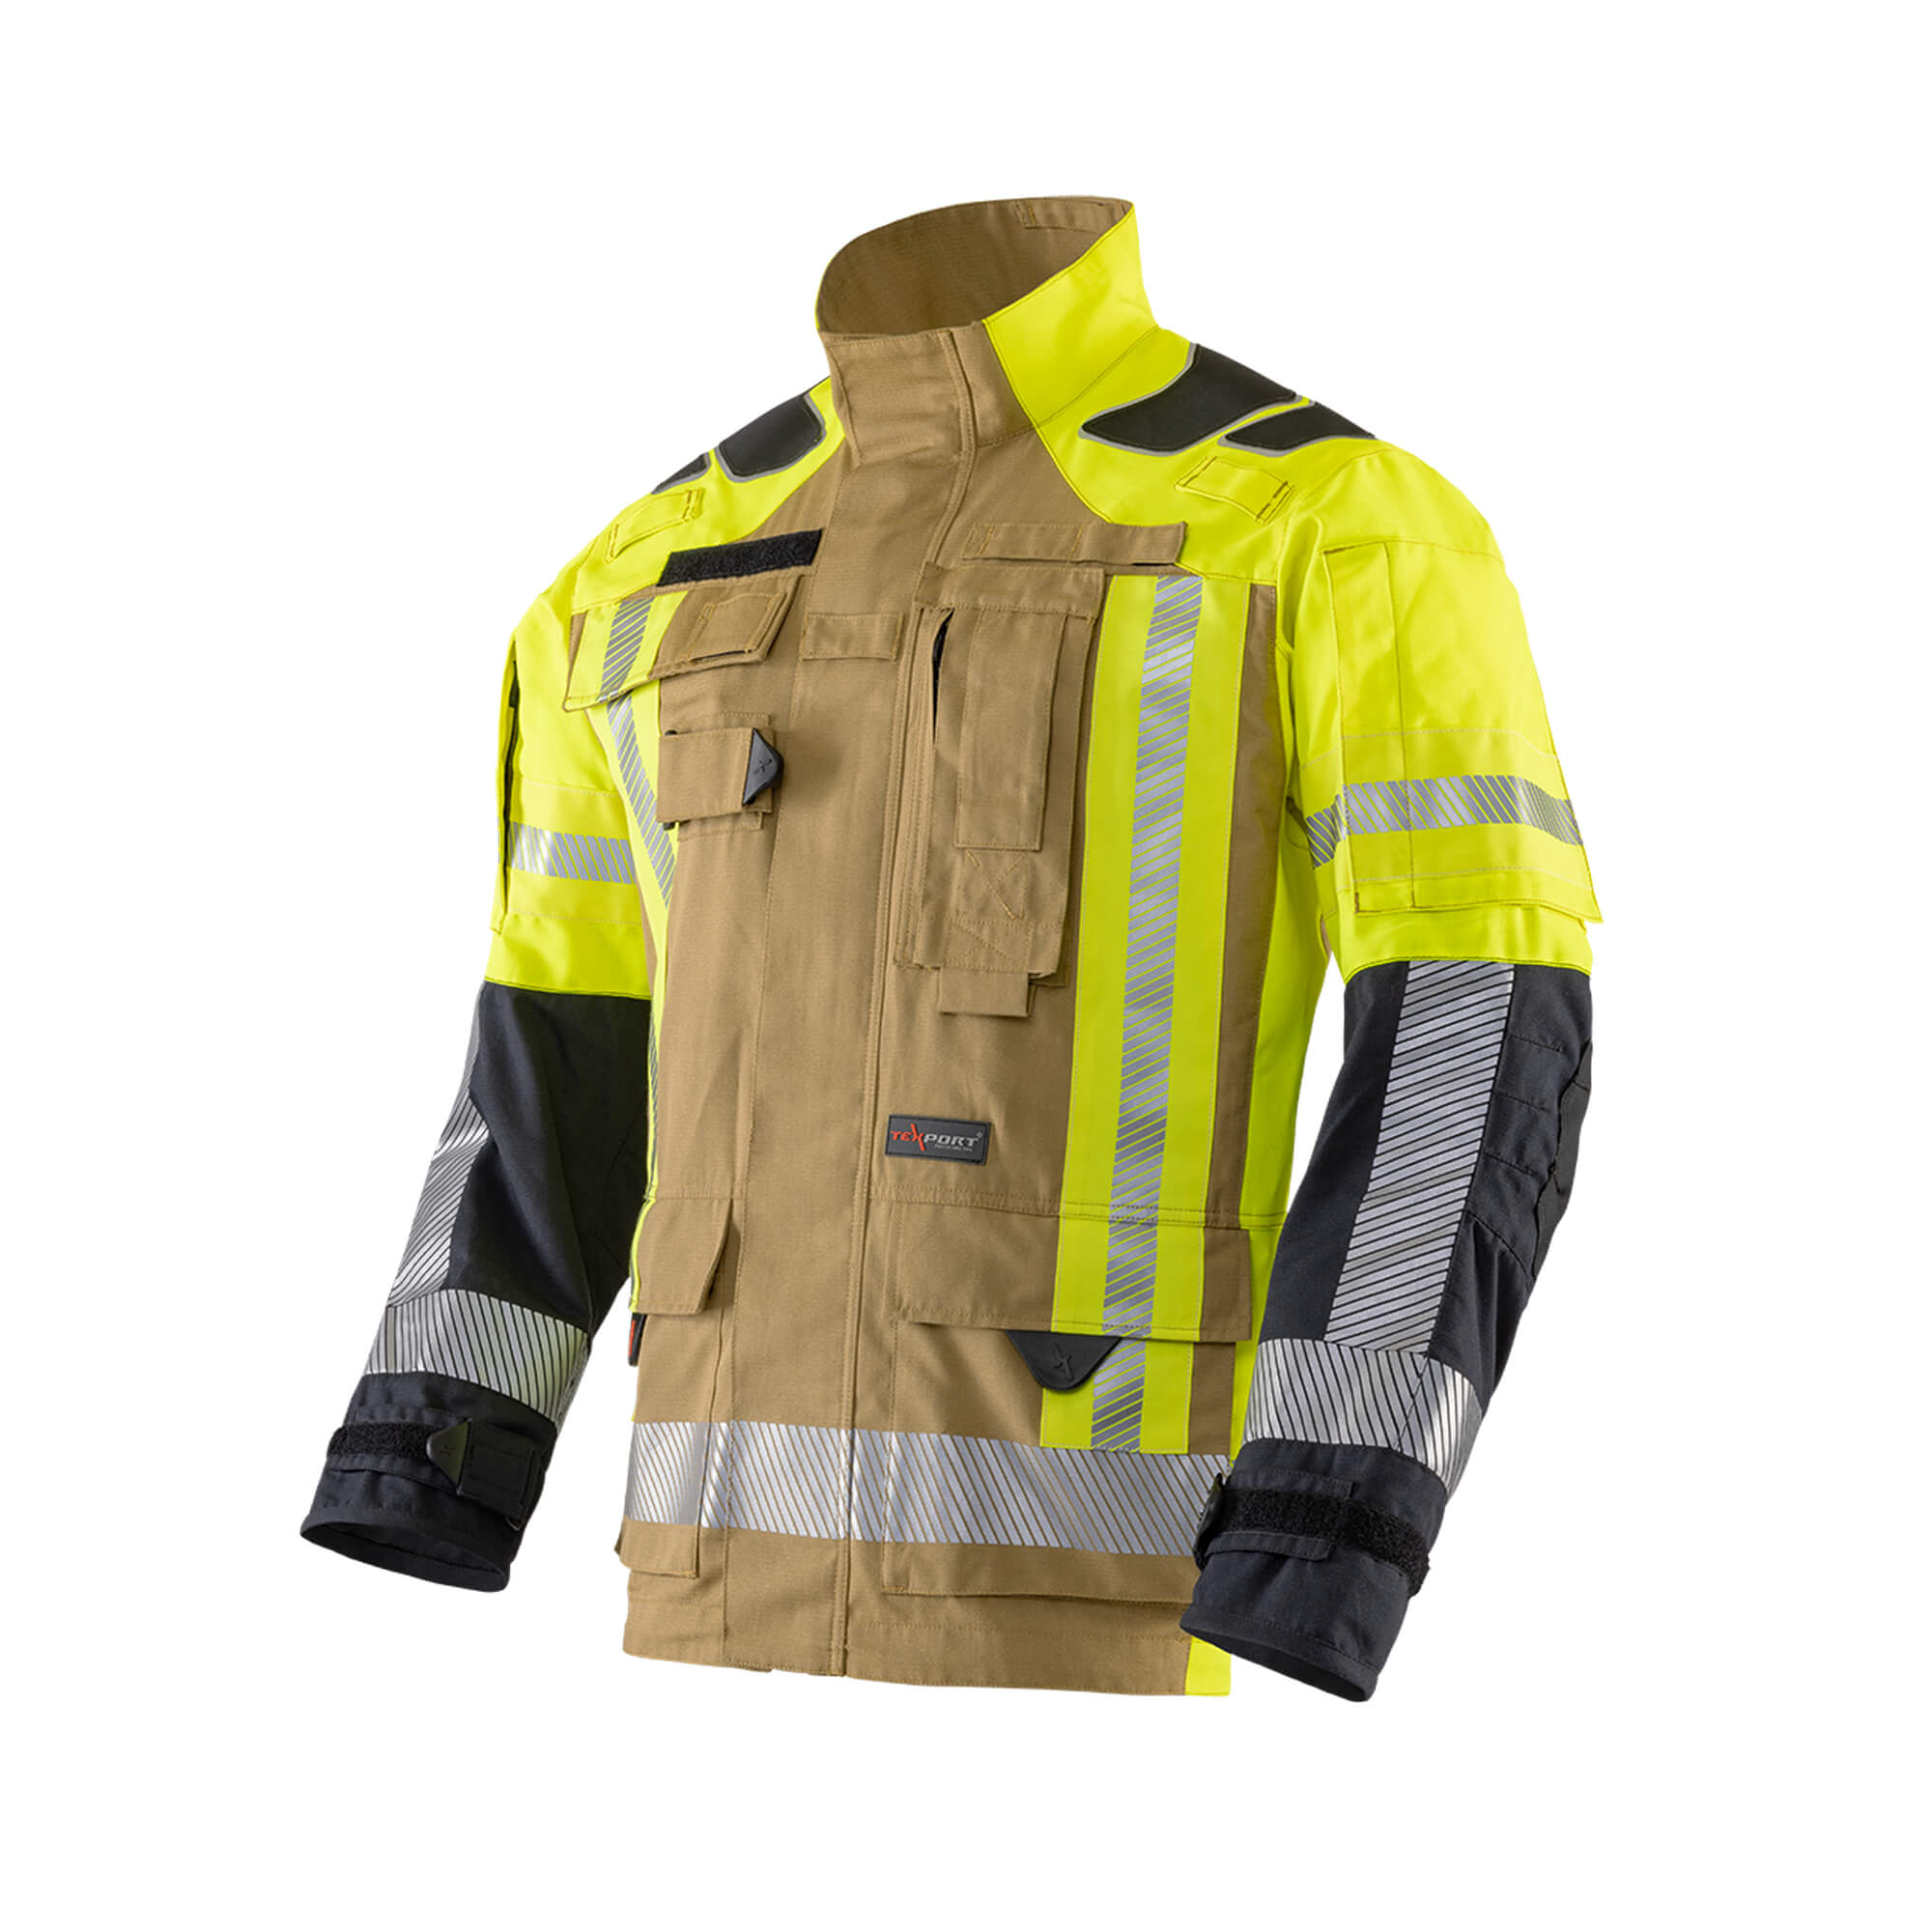 Texport Fire Recon THL Jacket